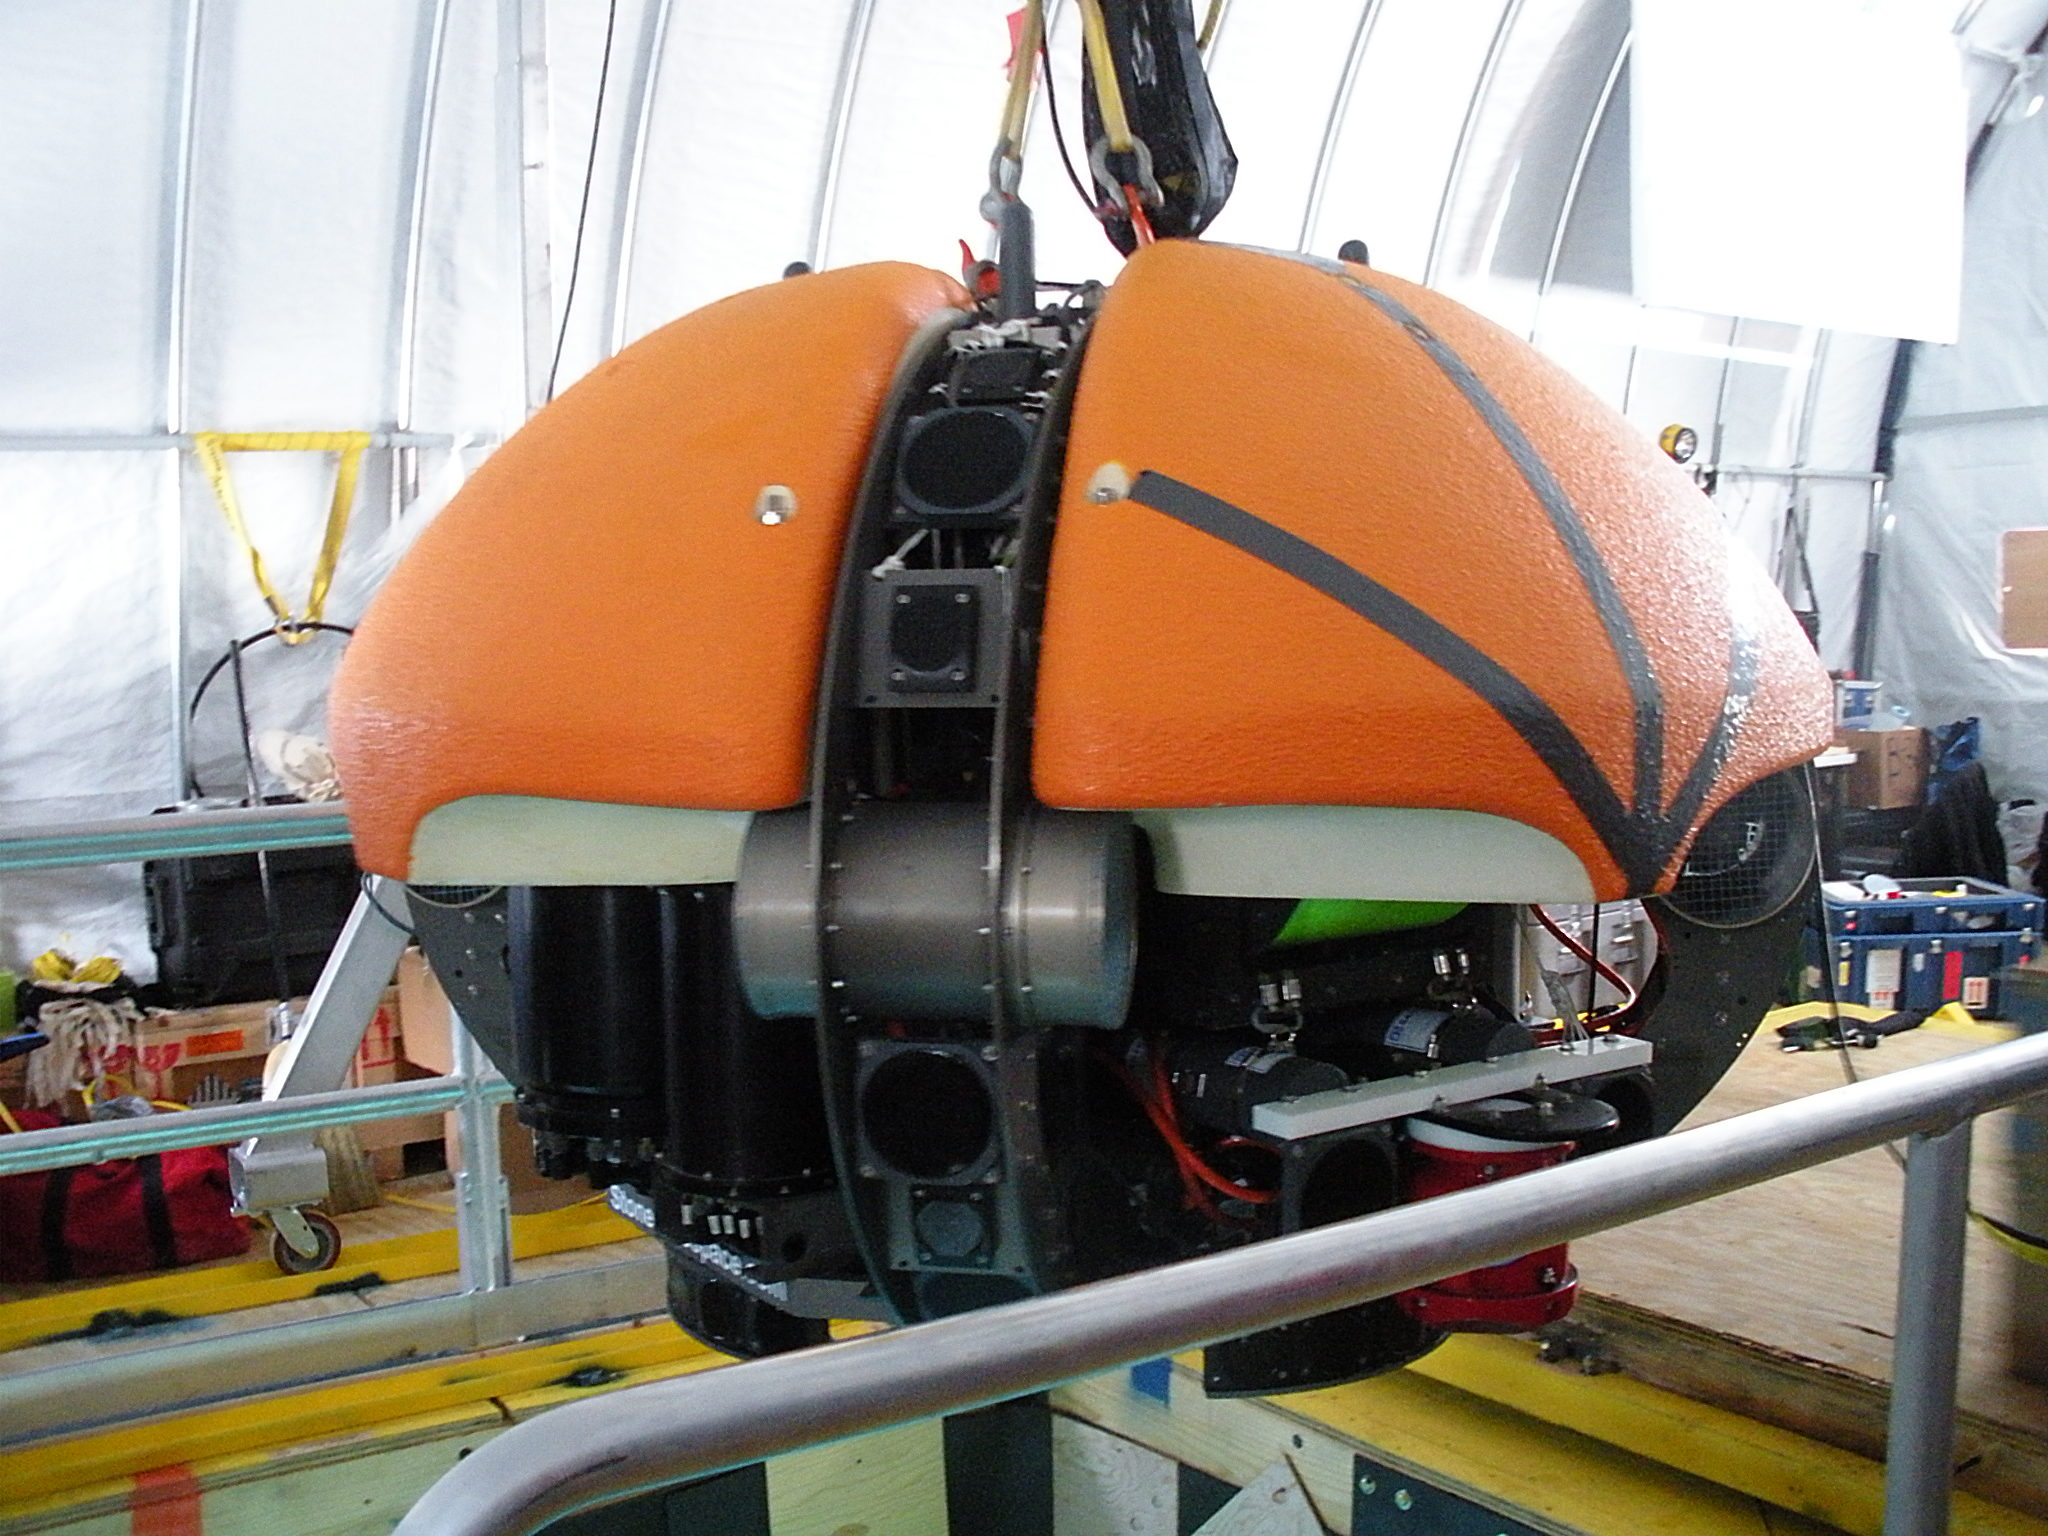 An orange robotic machine.